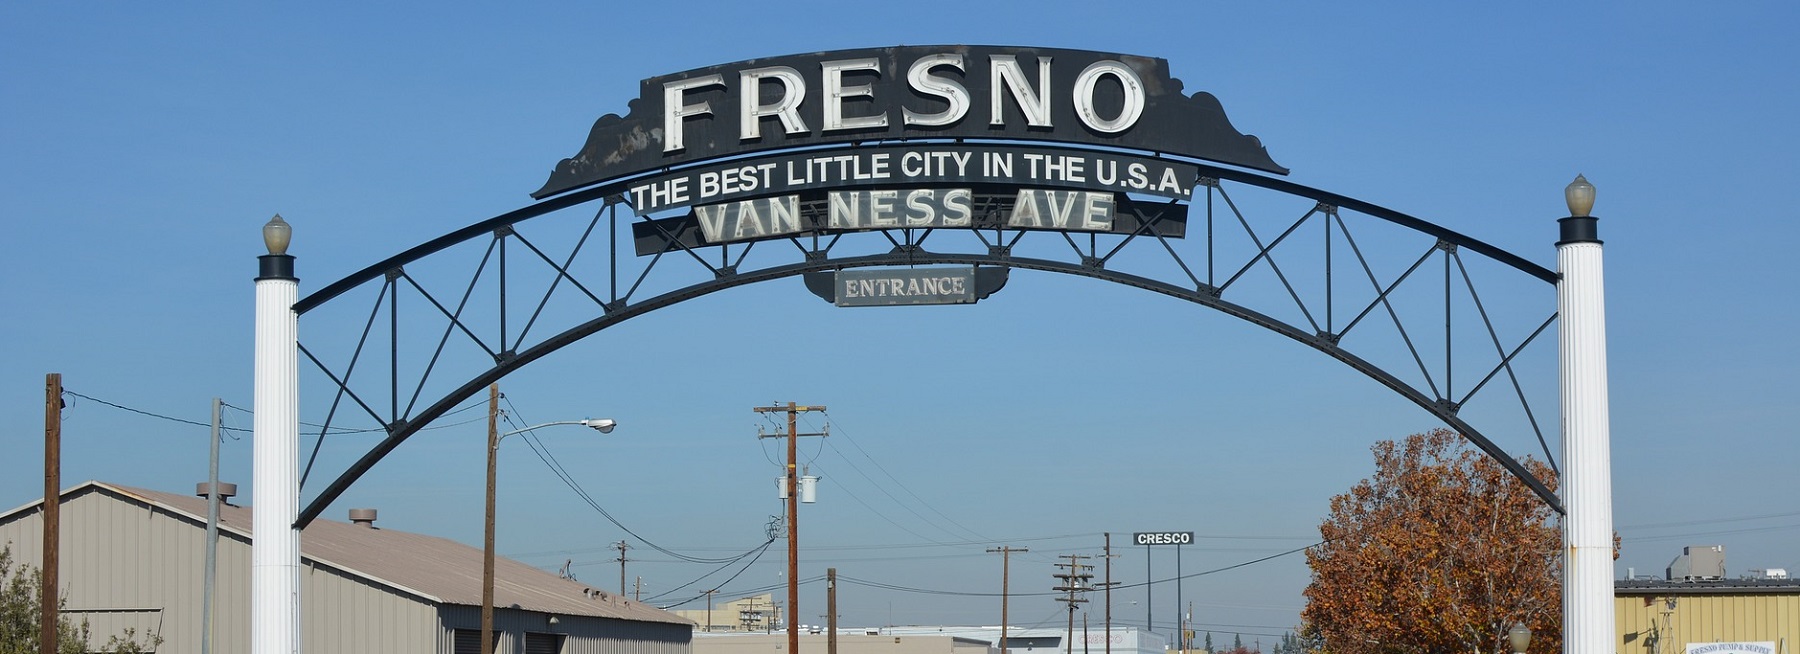 Fresno city sign 